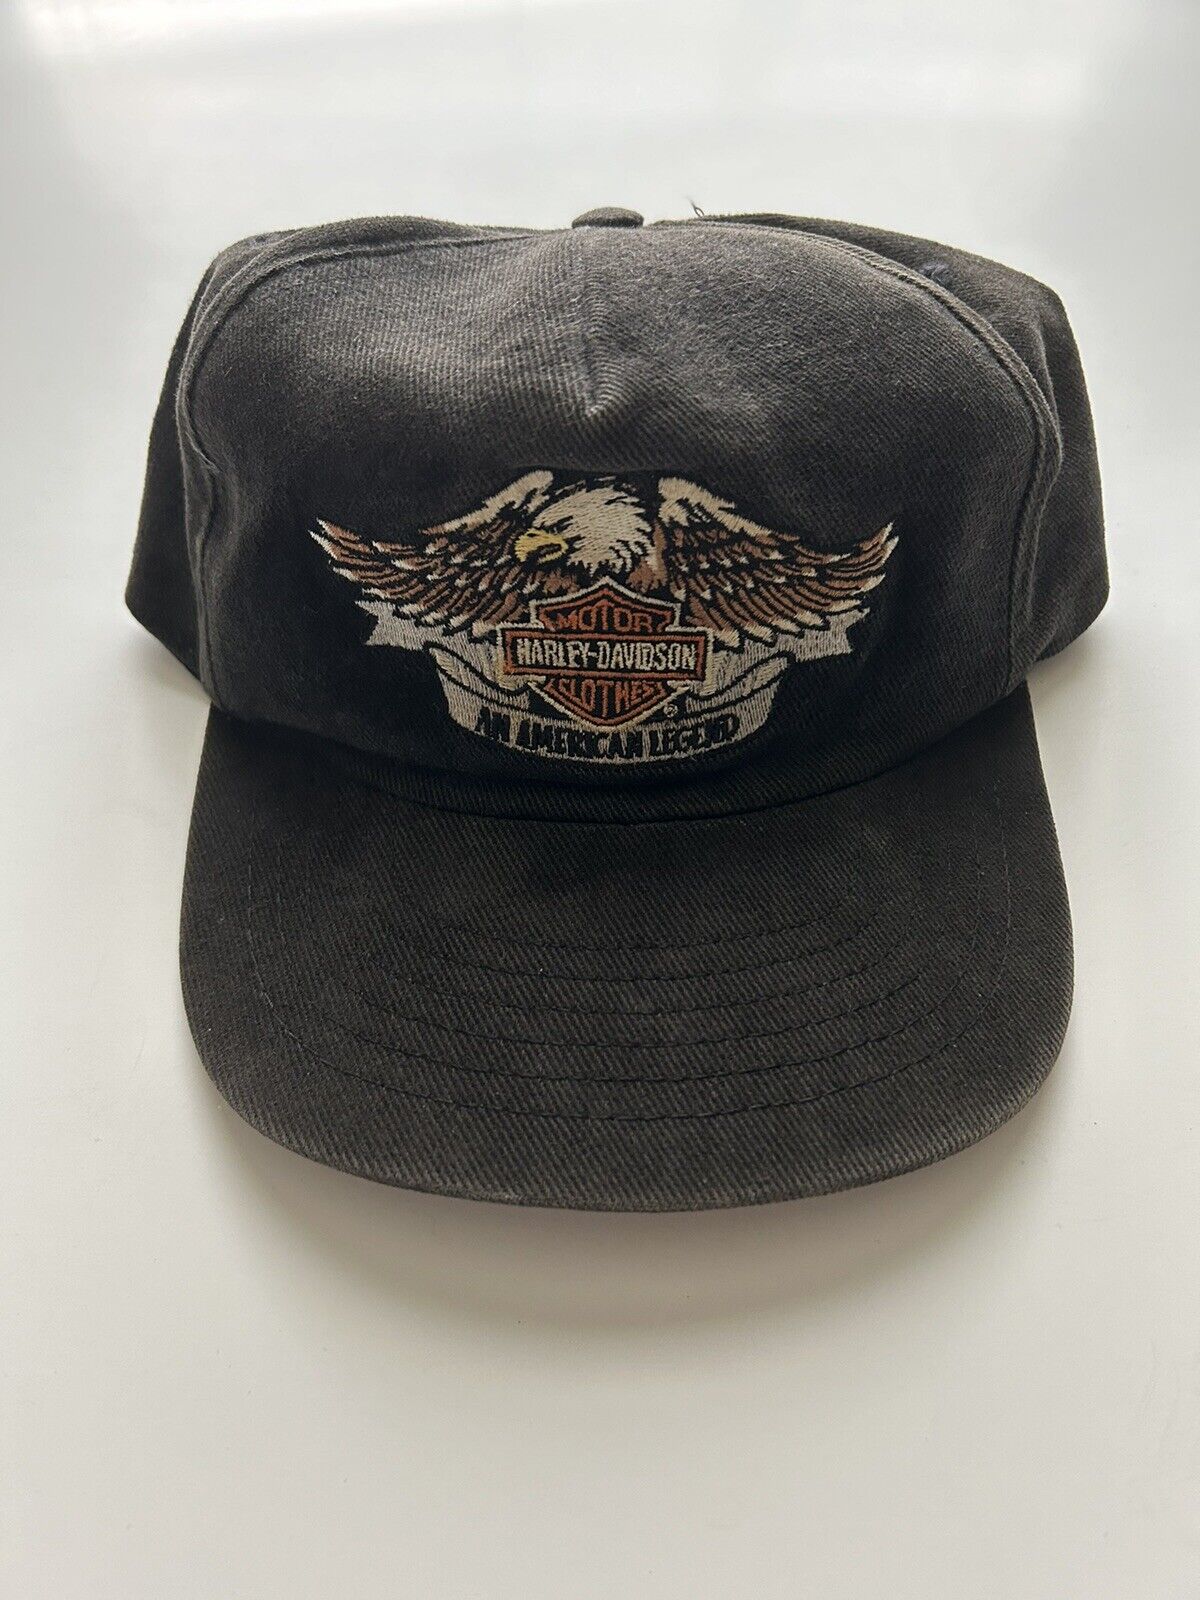 Vintage Harley-Davidson Embroided Black Snapback Hat USA Made 90s Used